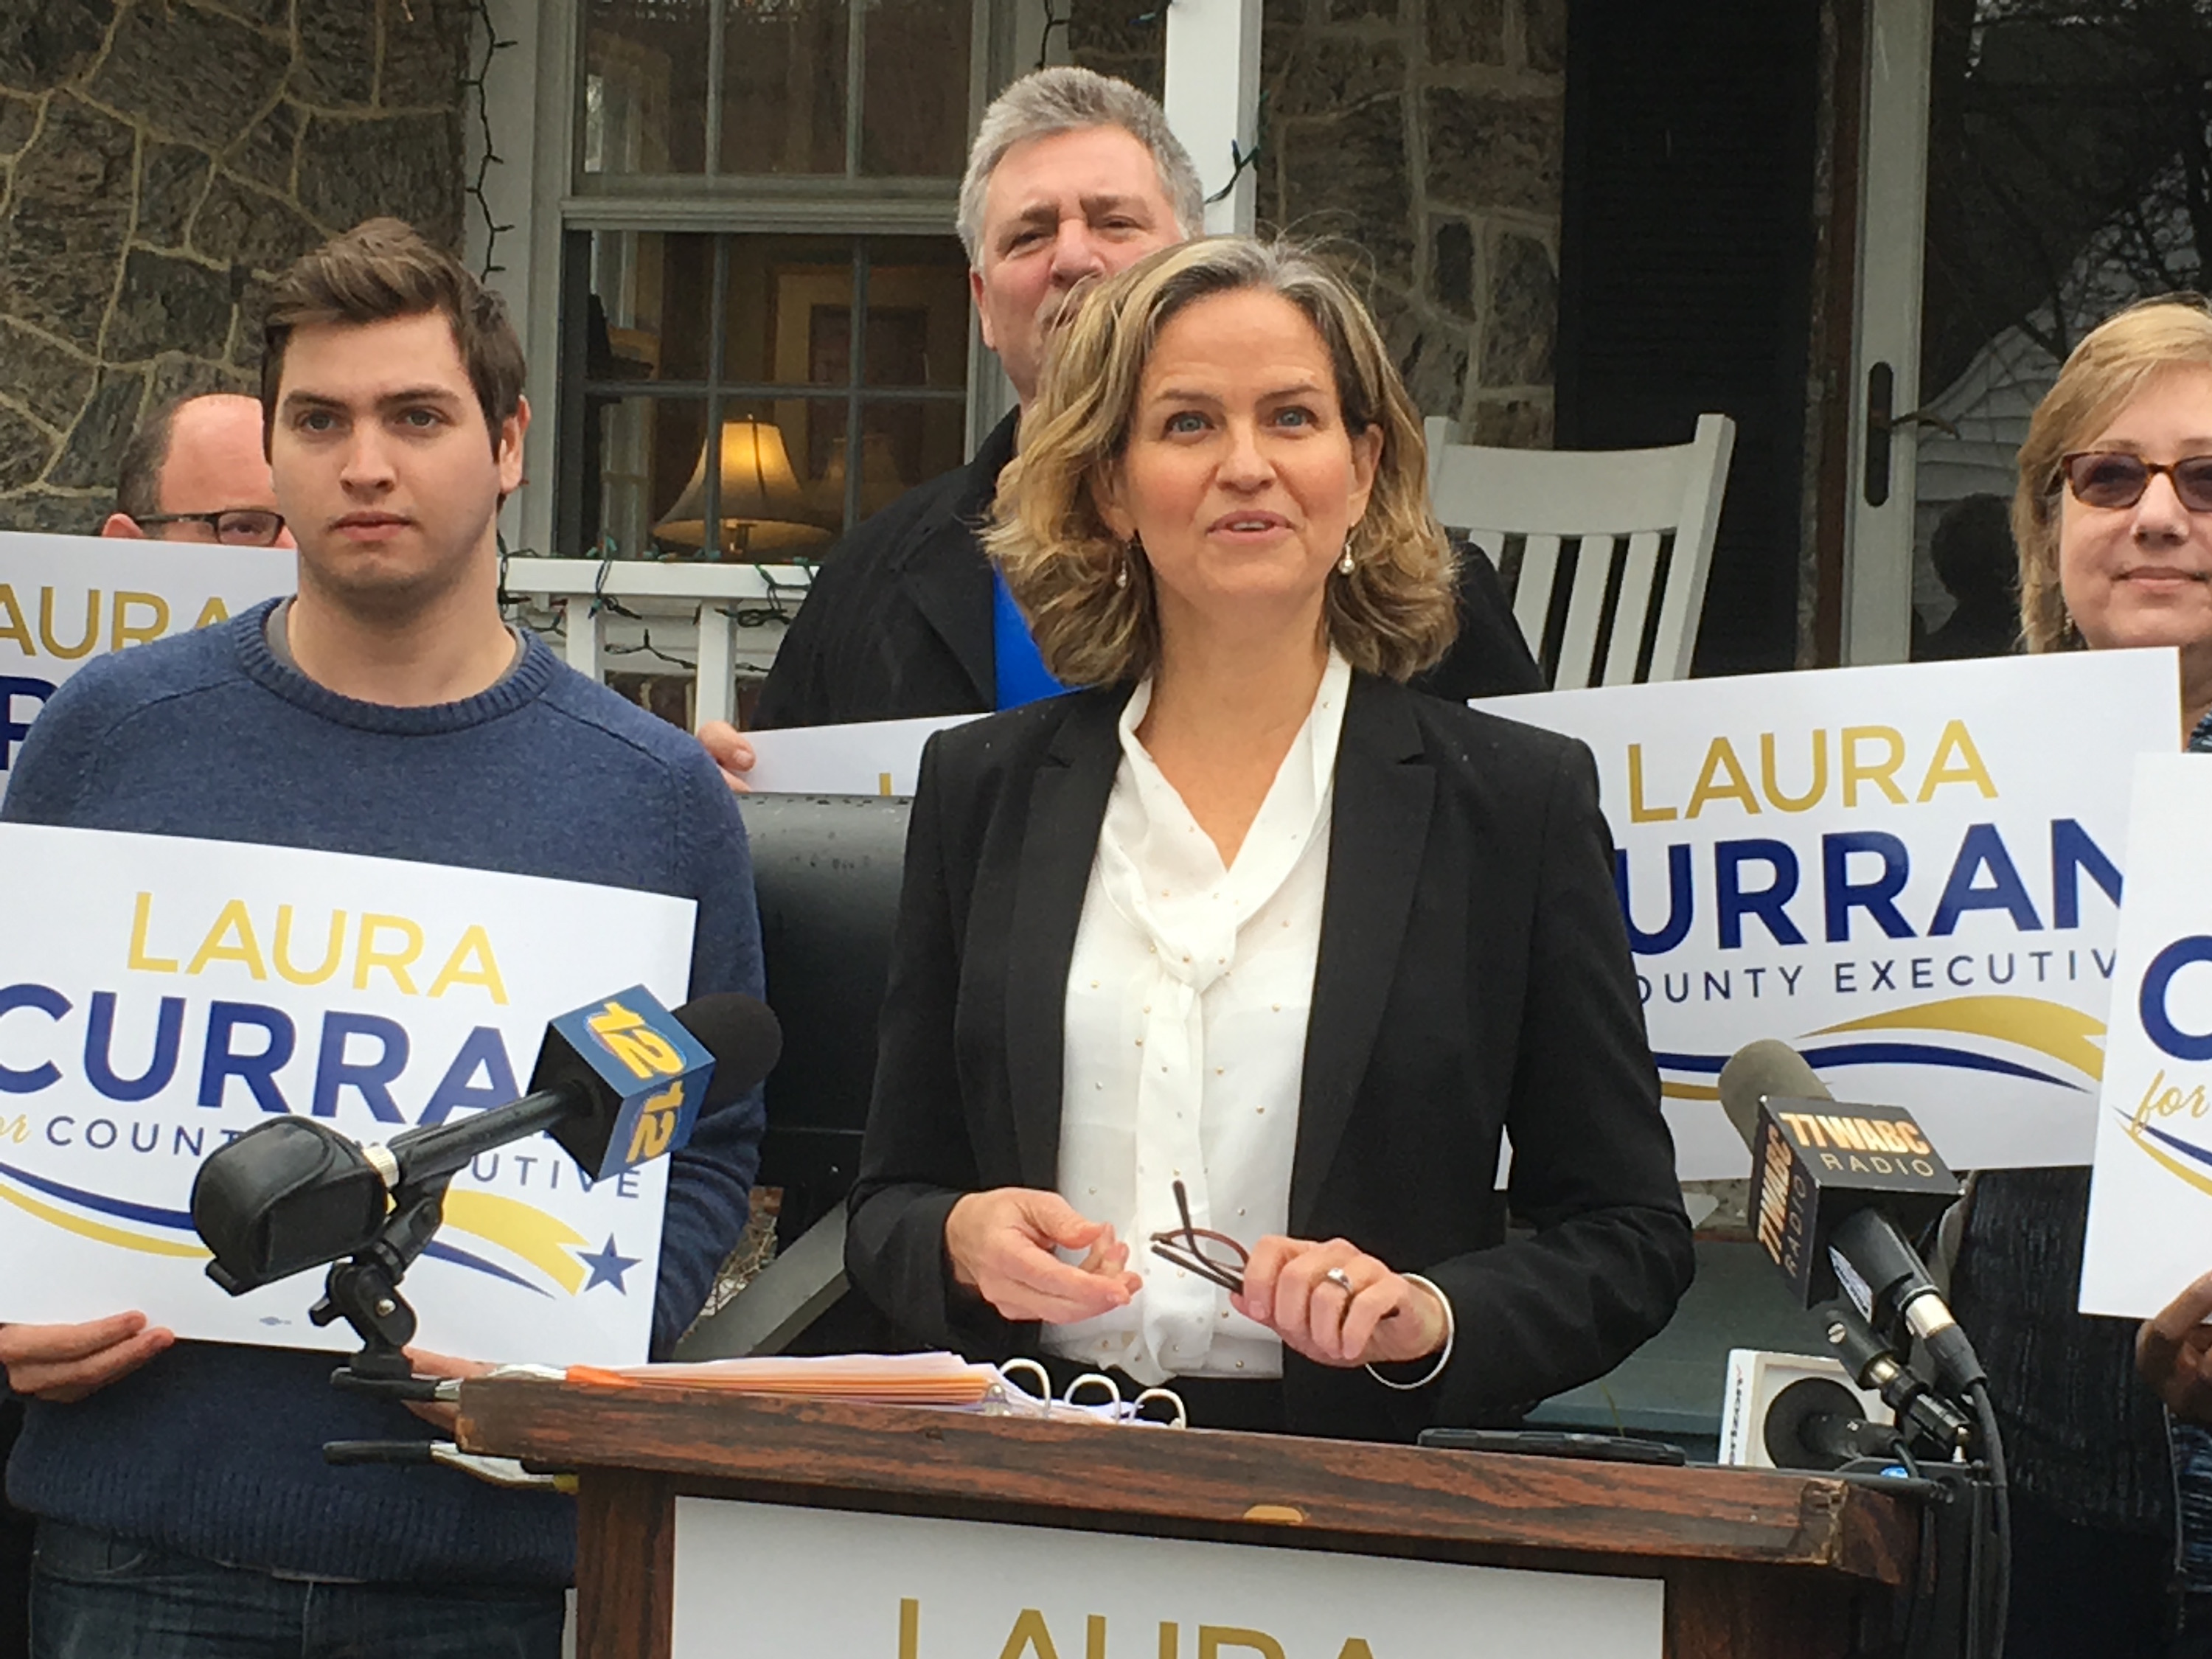 Laura Curran backed by Dem state senators